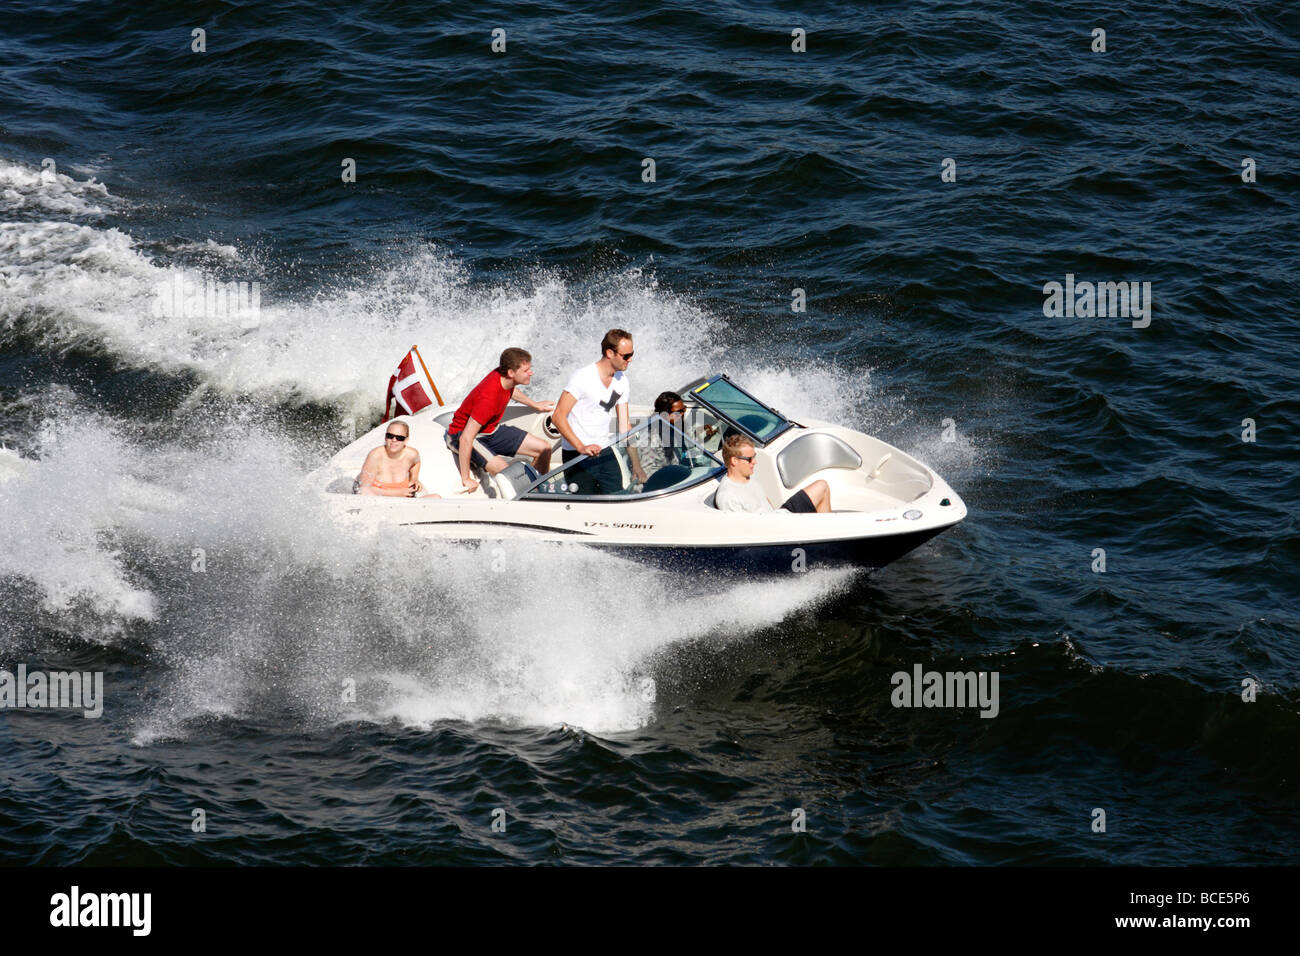 Swedish family on Recreational Boat near Stockholm with Swedish Flag Stock Photo